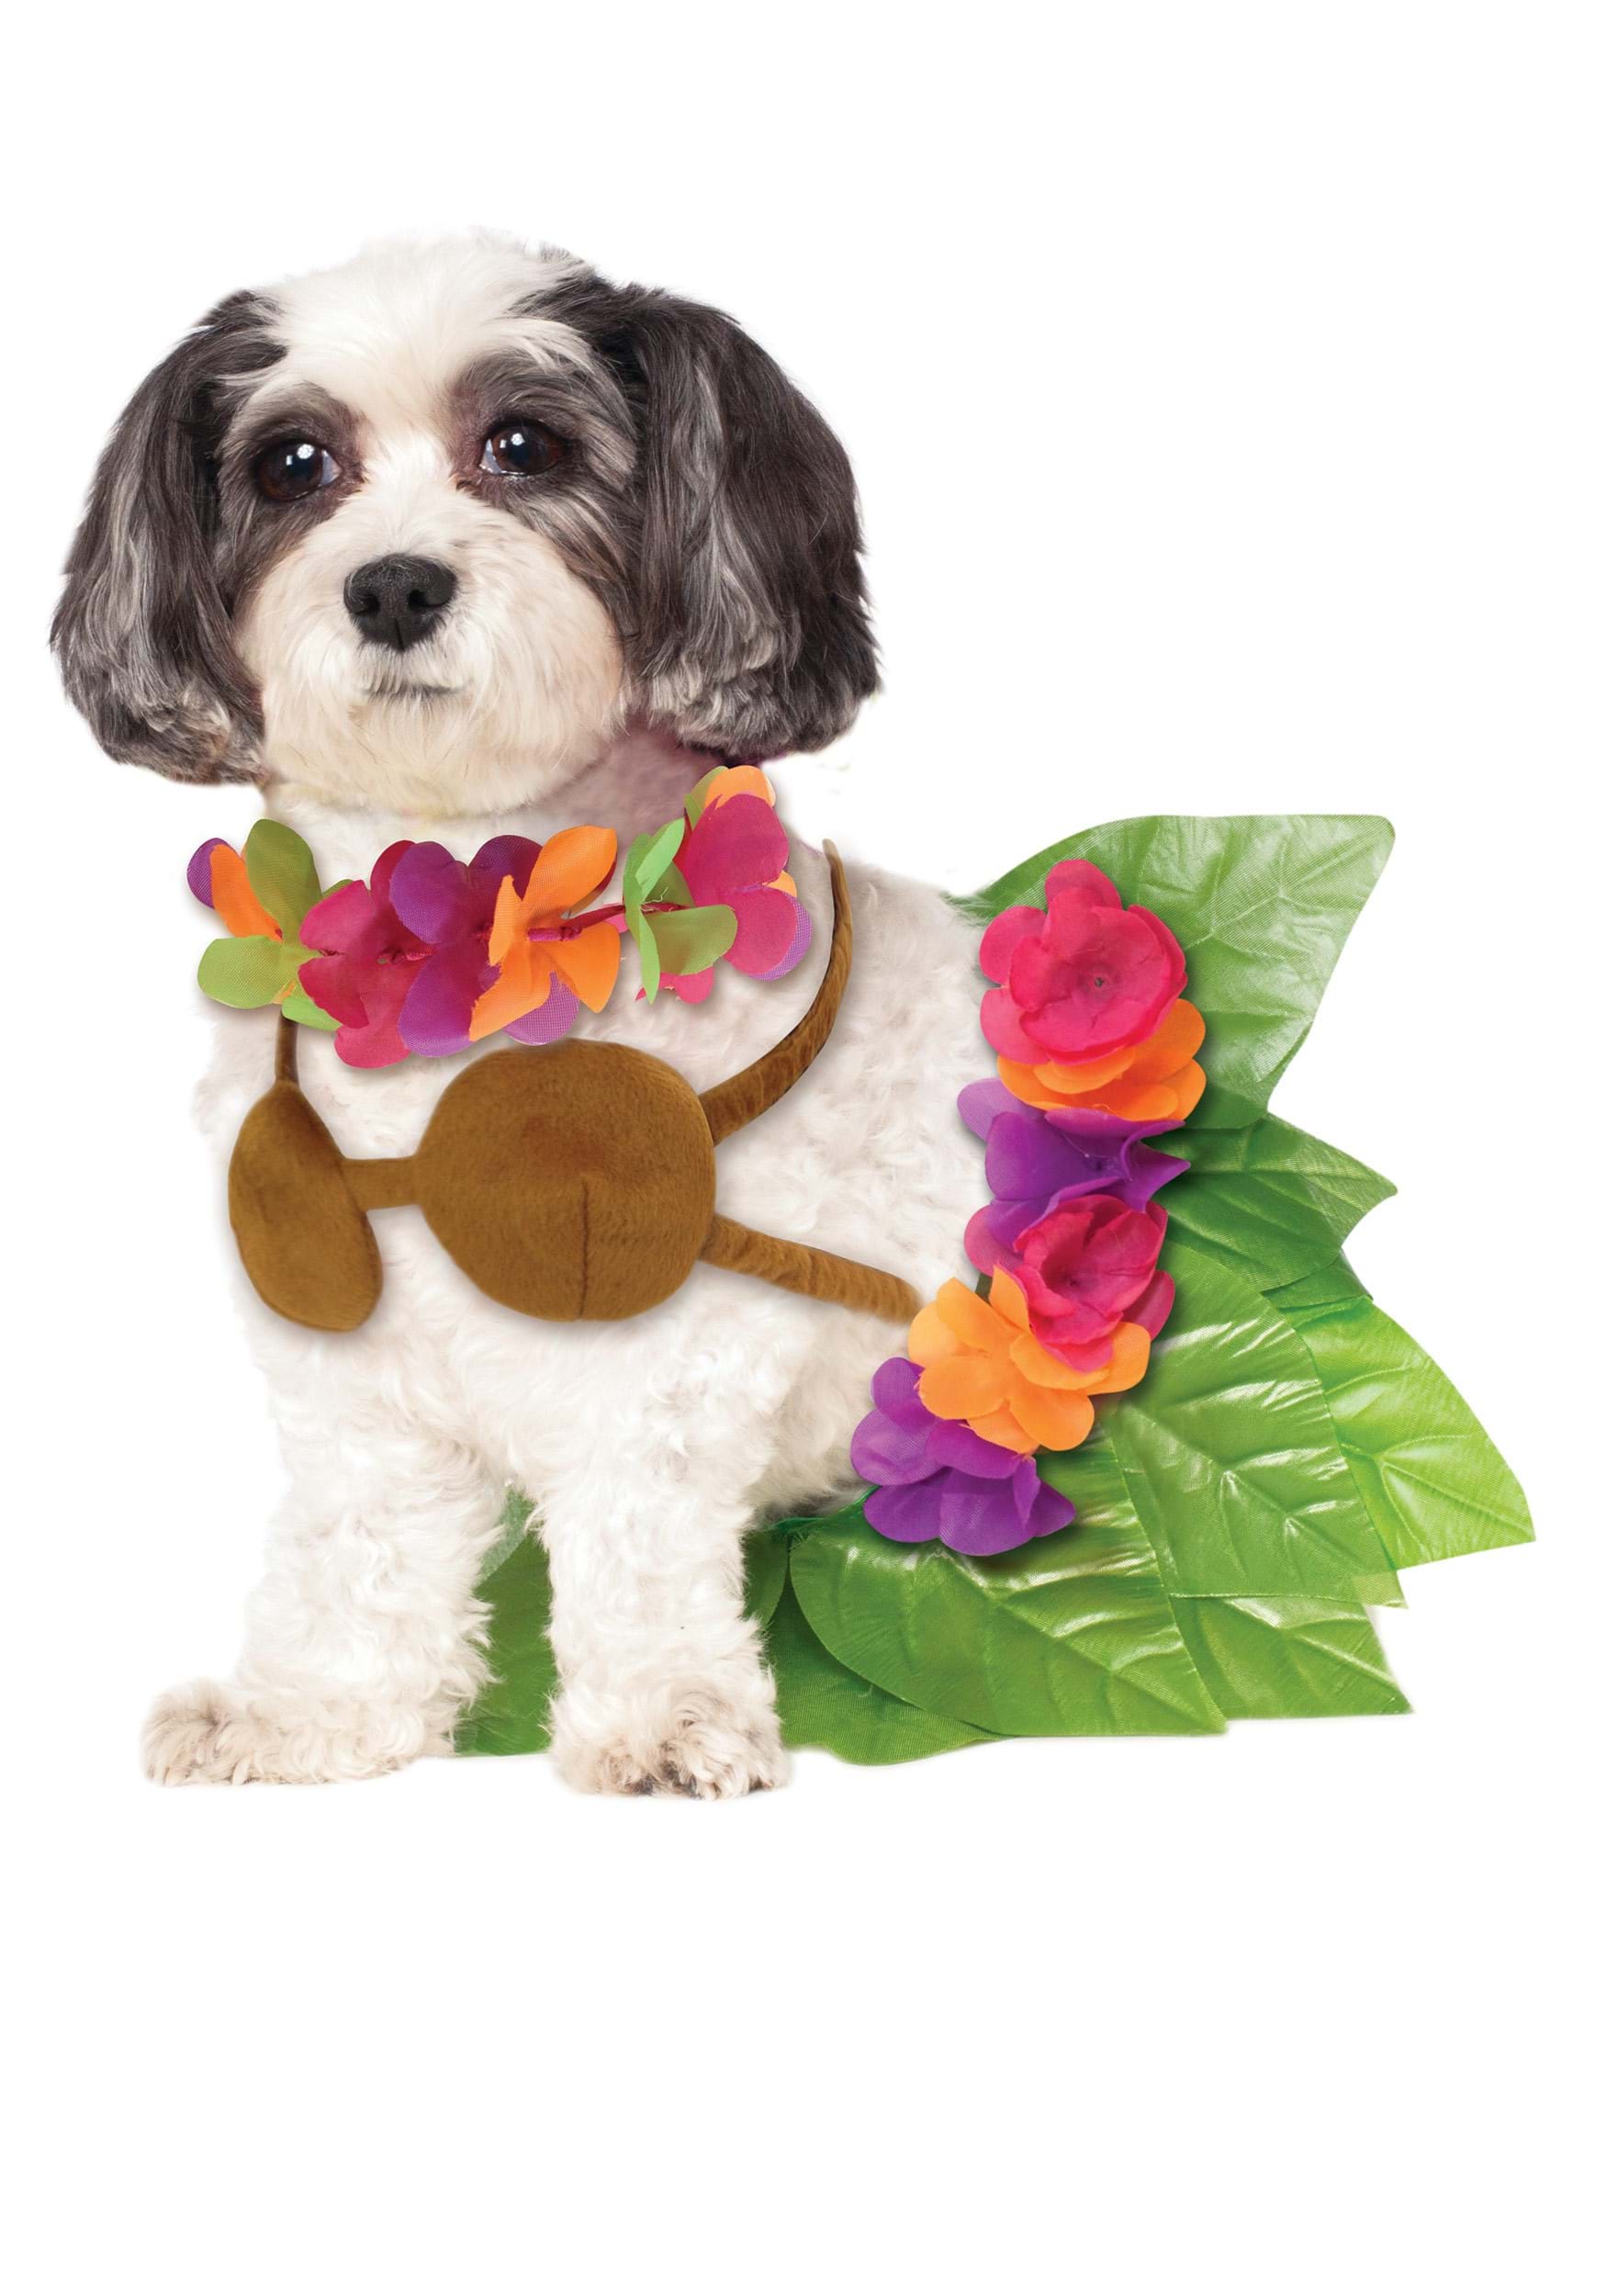 tricertops dog costume